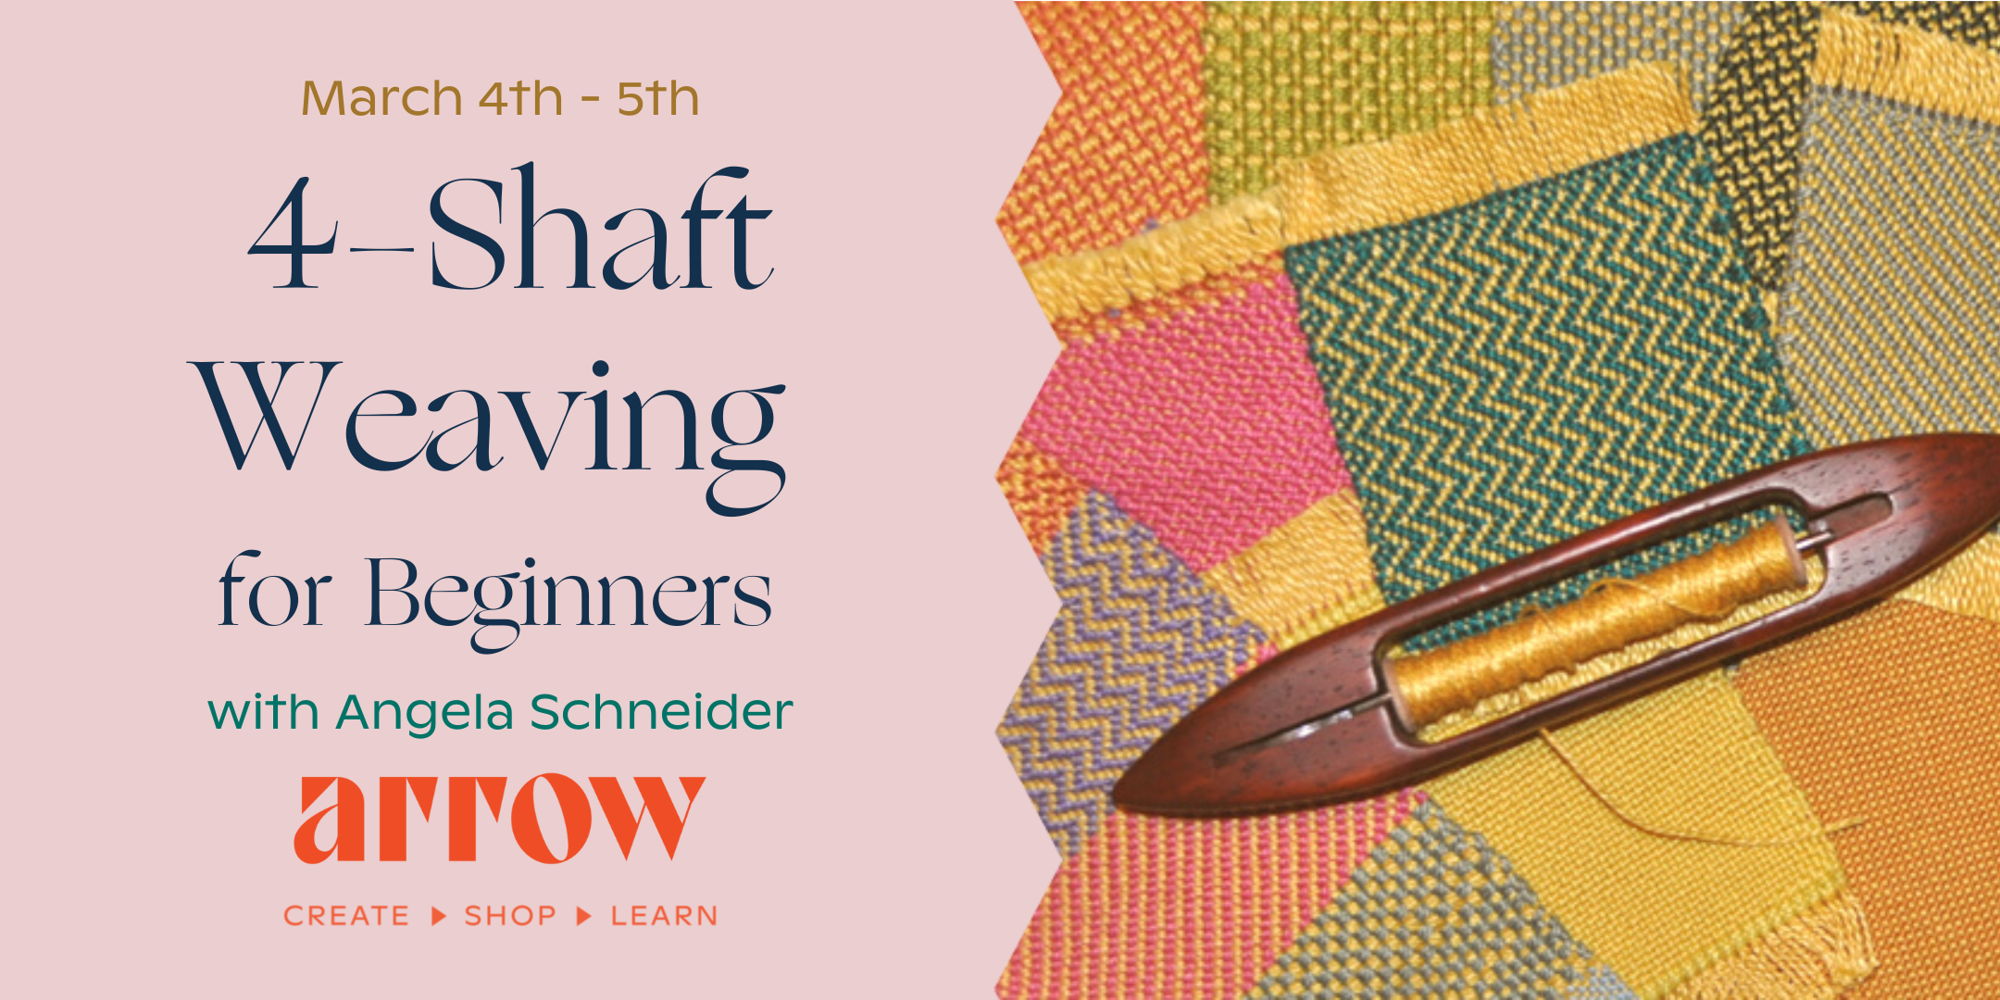 Beginning Weaving on the 4 Shaft Loom promotional image